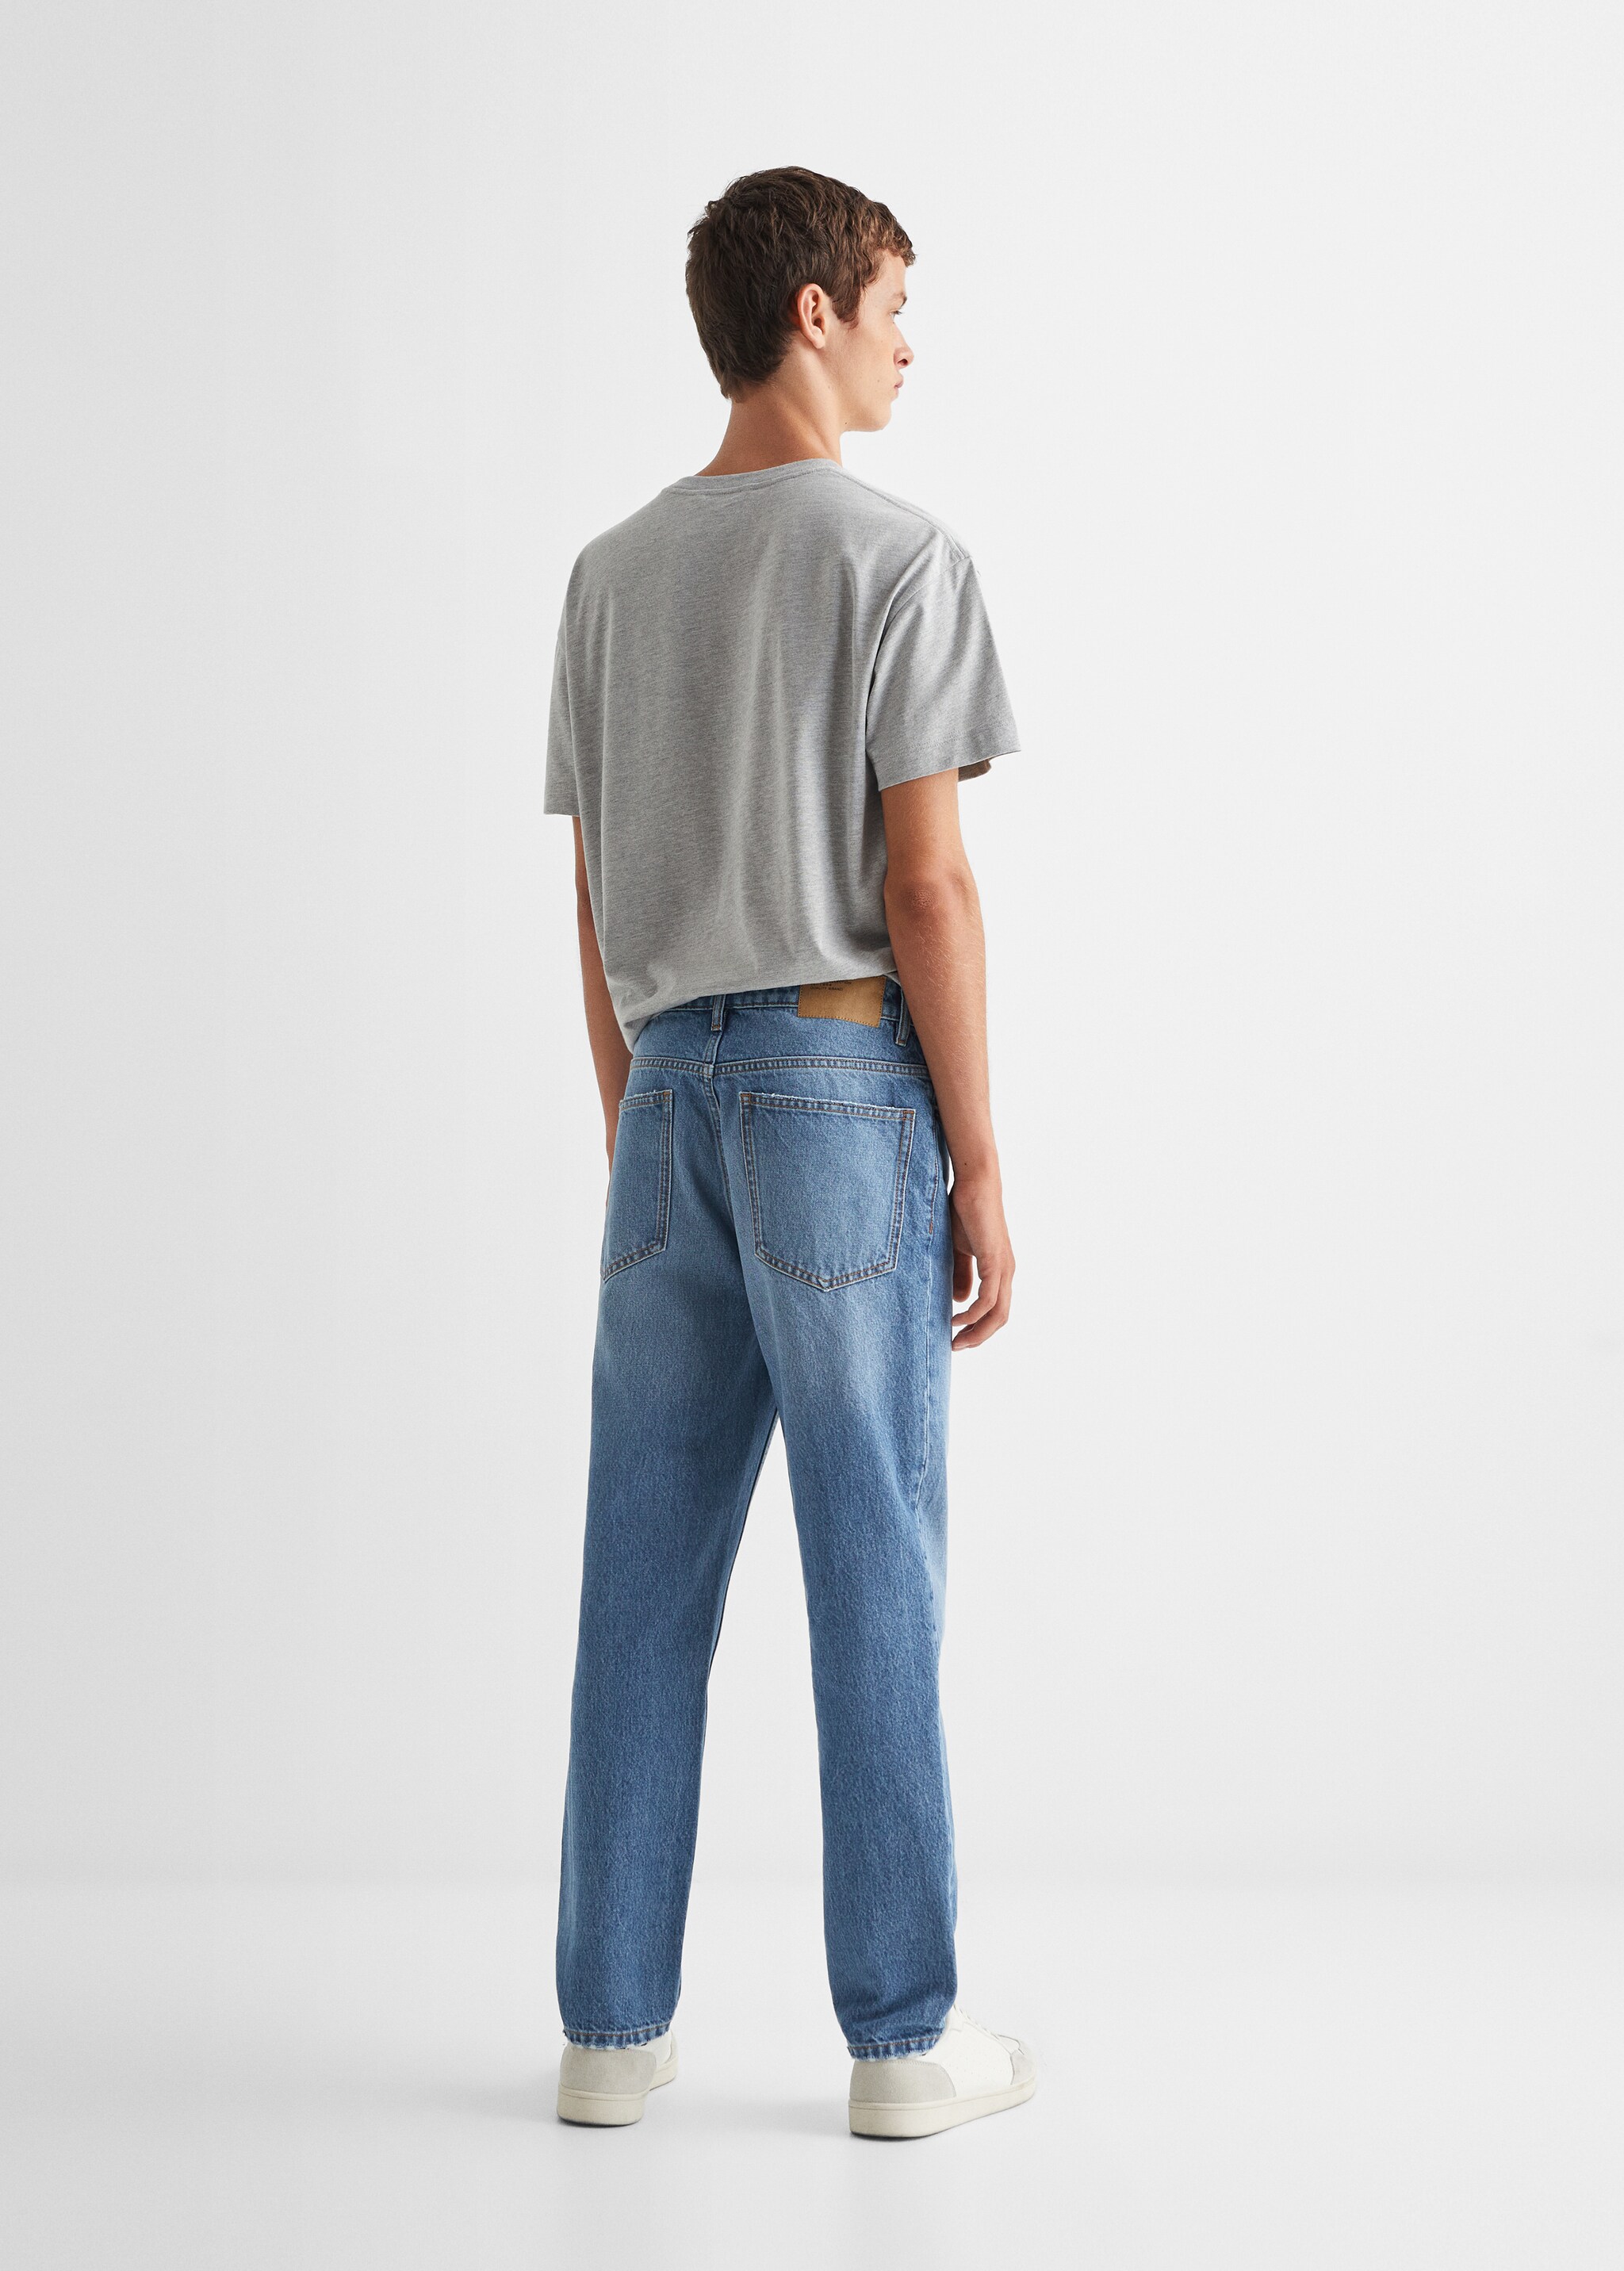 Jeans regular fit - Reverso del artículo